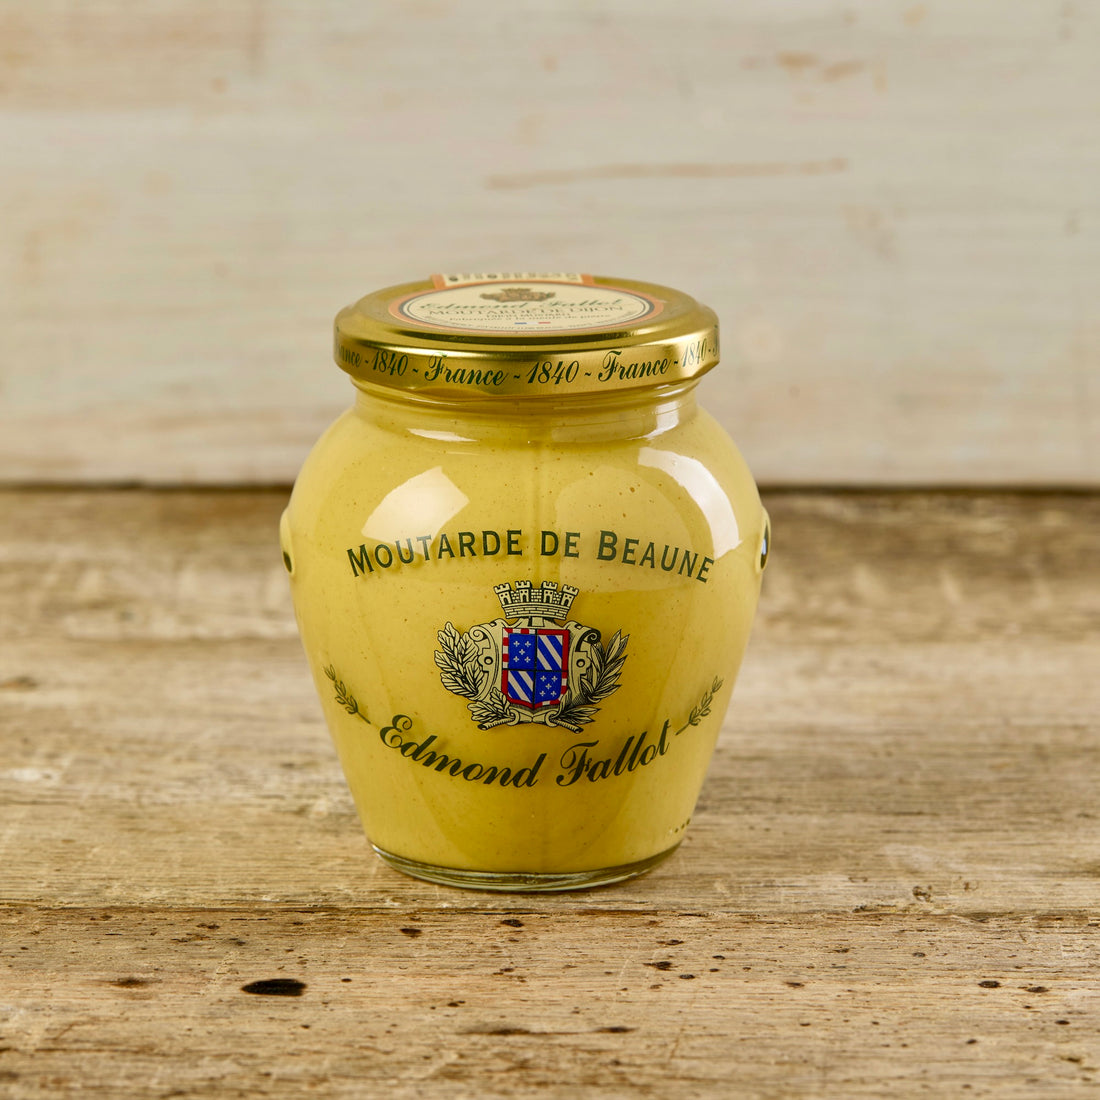 french dijon mustard from edmond fallot